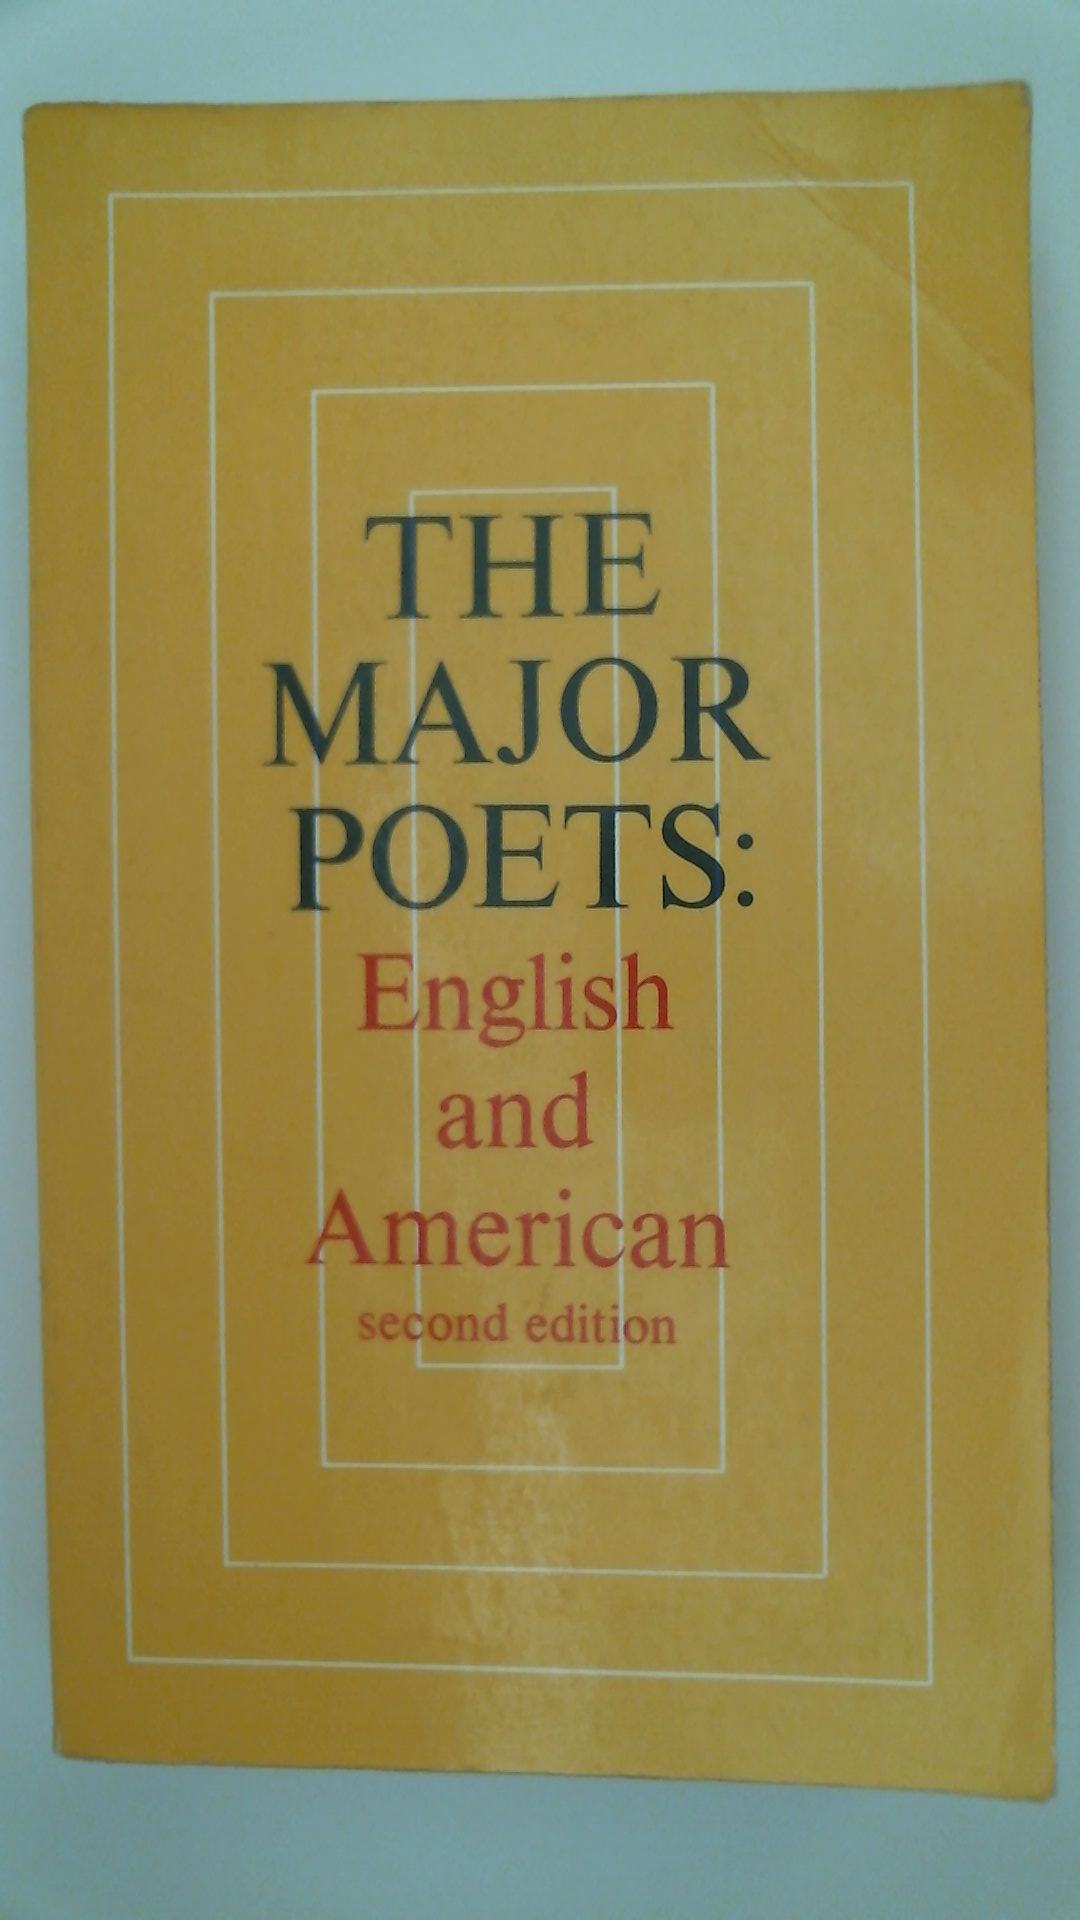 The Major Poets: English and American